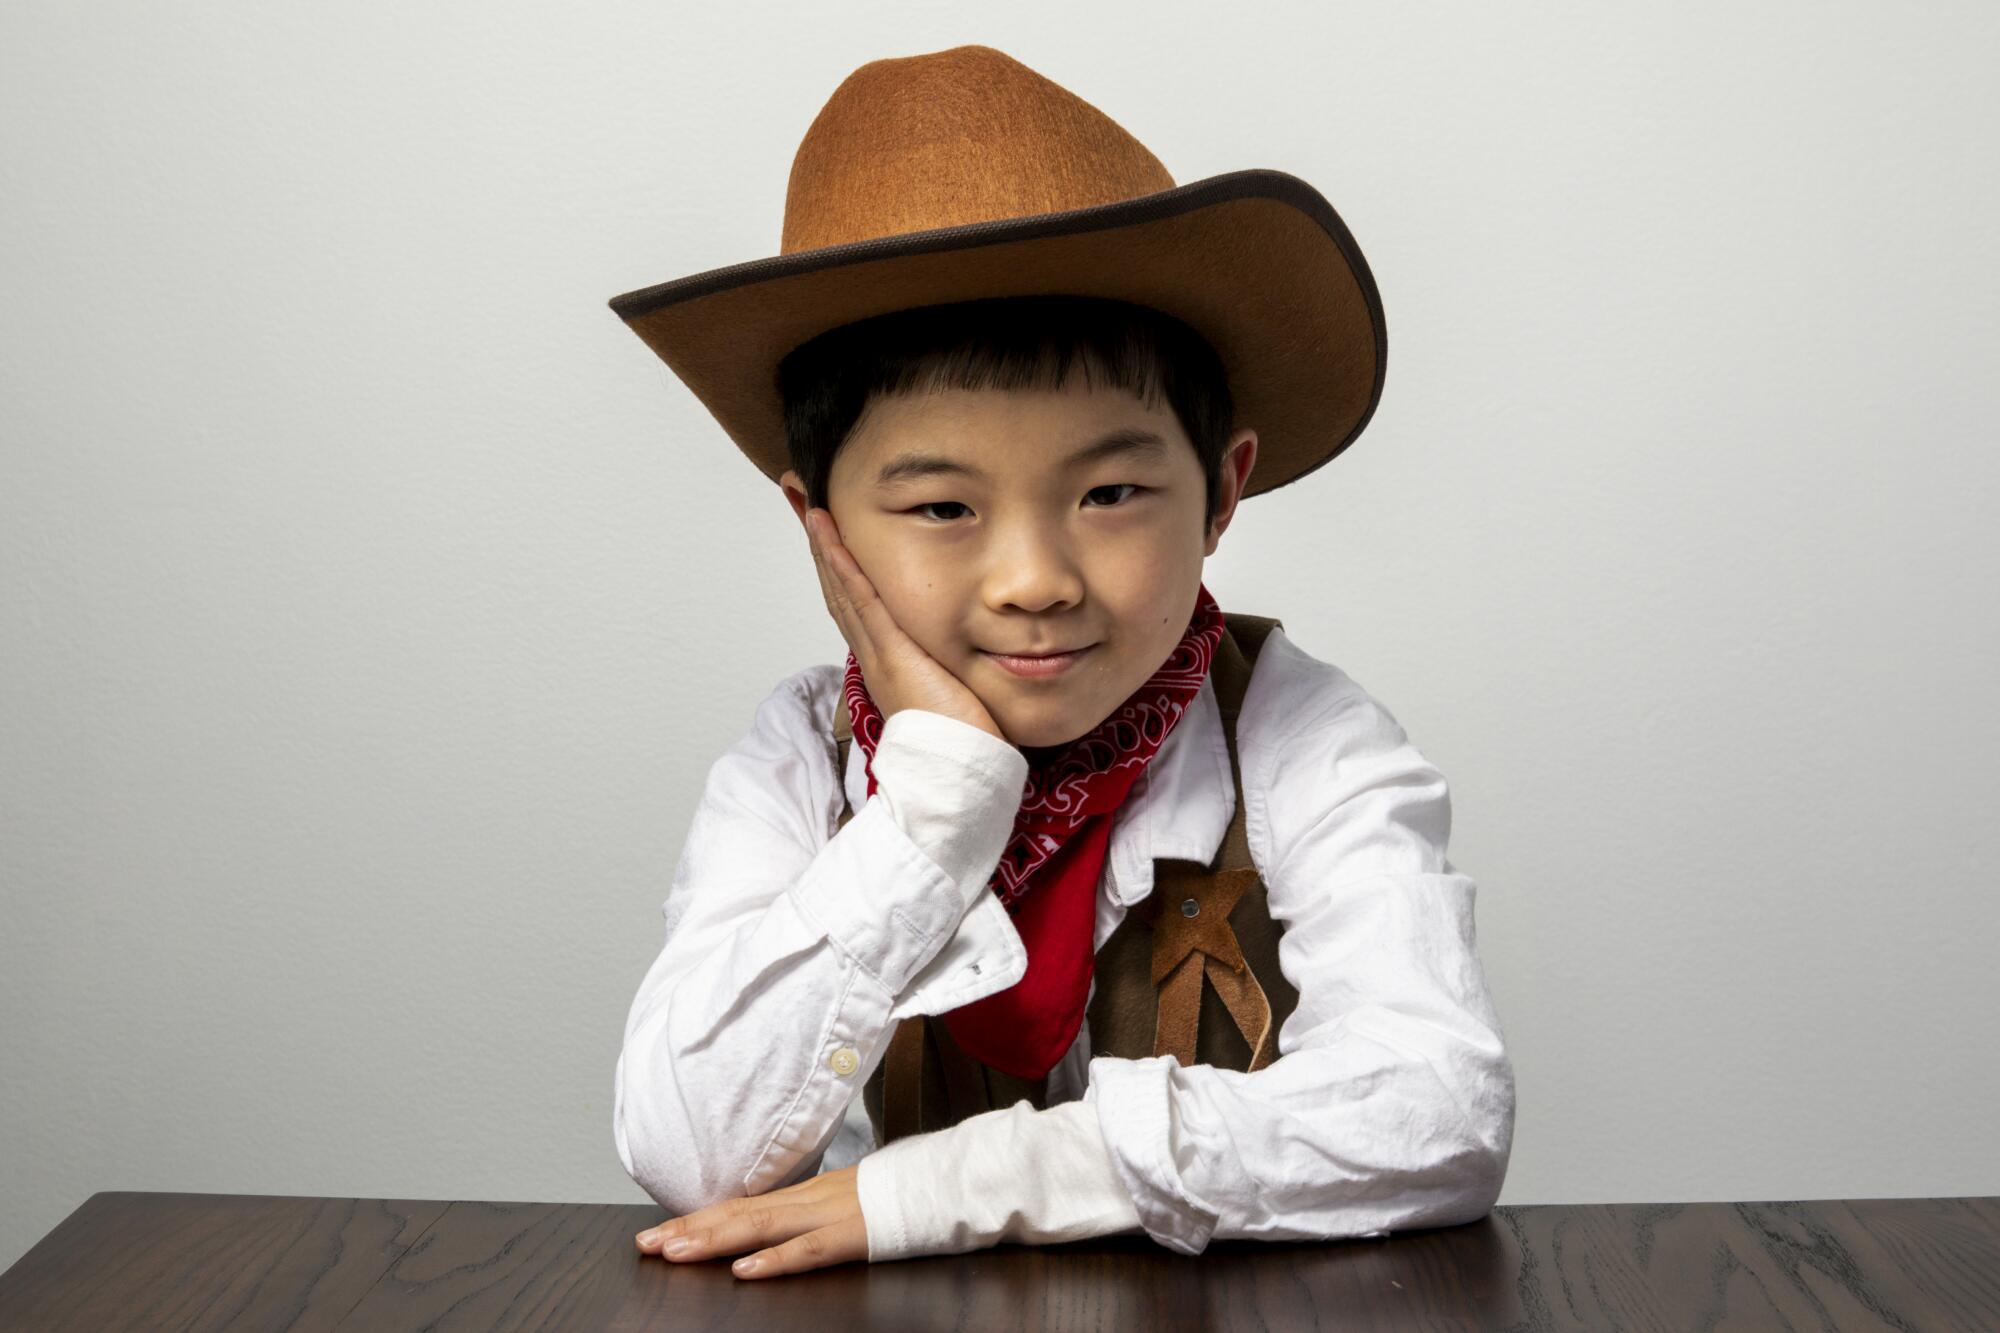 Alan Kim wears a cowboy outfit to a “Minari” photo shoot at the 2020 Sundance Film Festival.